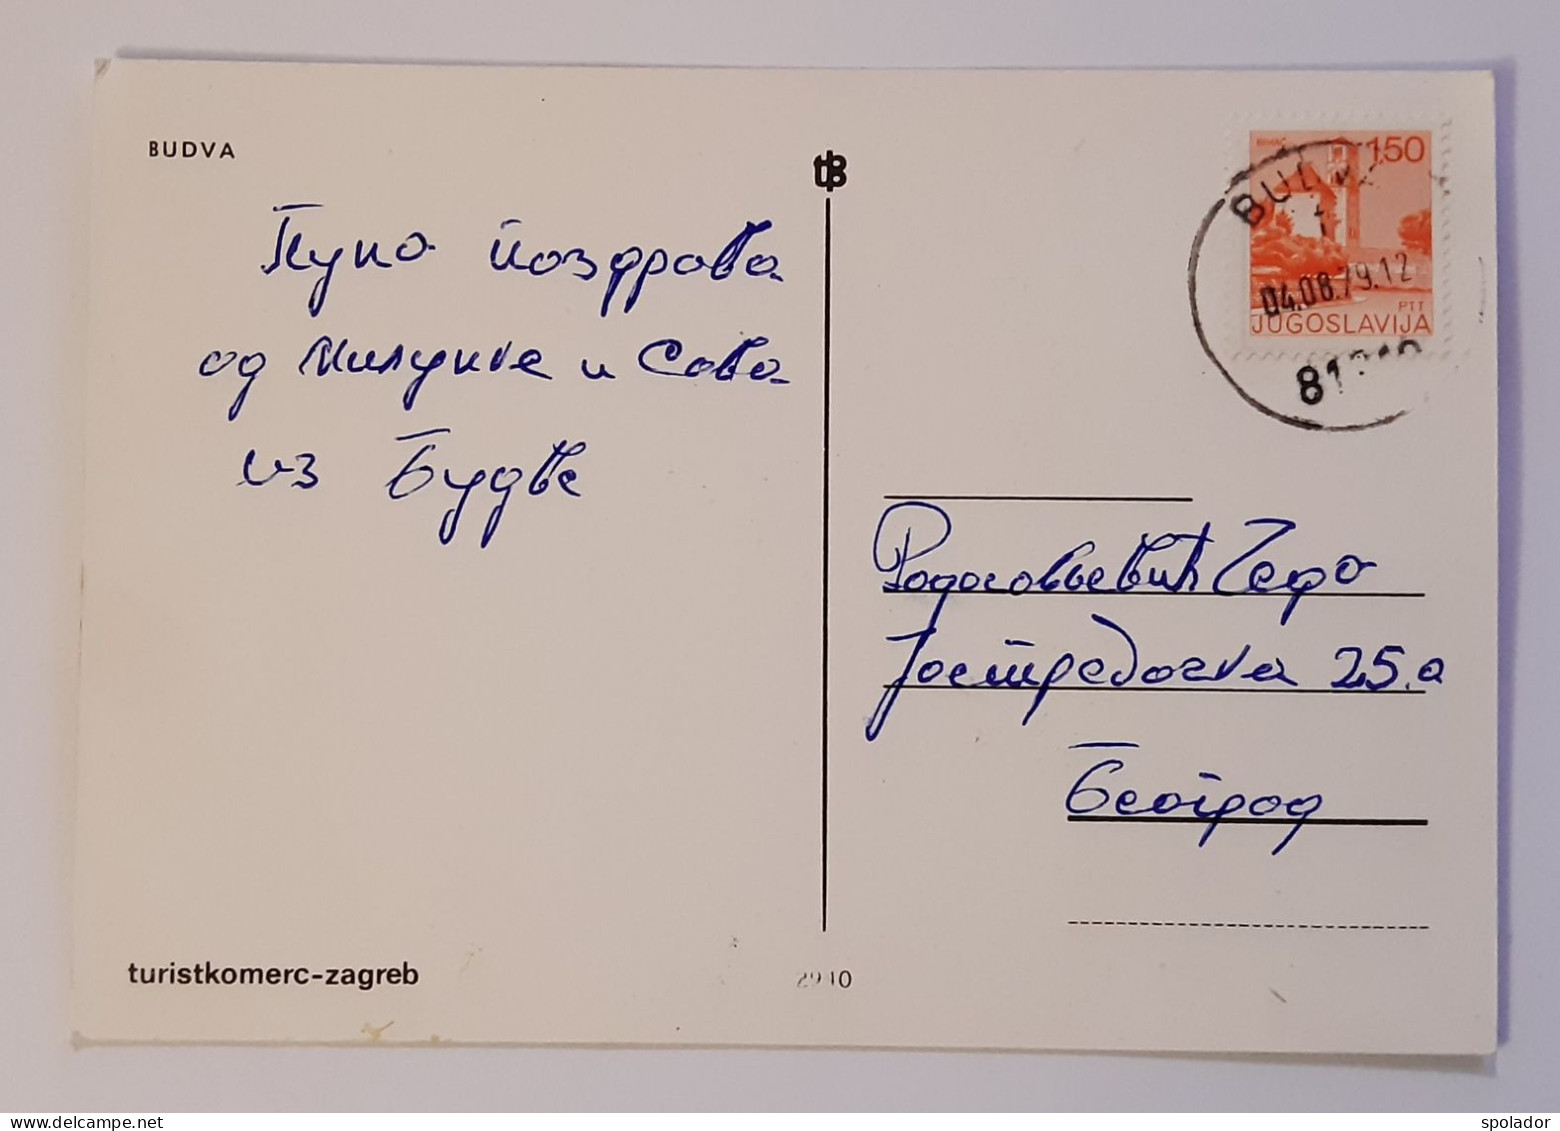 BUDVA-Ex-Yugoslavia-Vintage Panorama Postcard-Montenegro-Crna Gora-used With Stamp 1979 - Jugoslawien